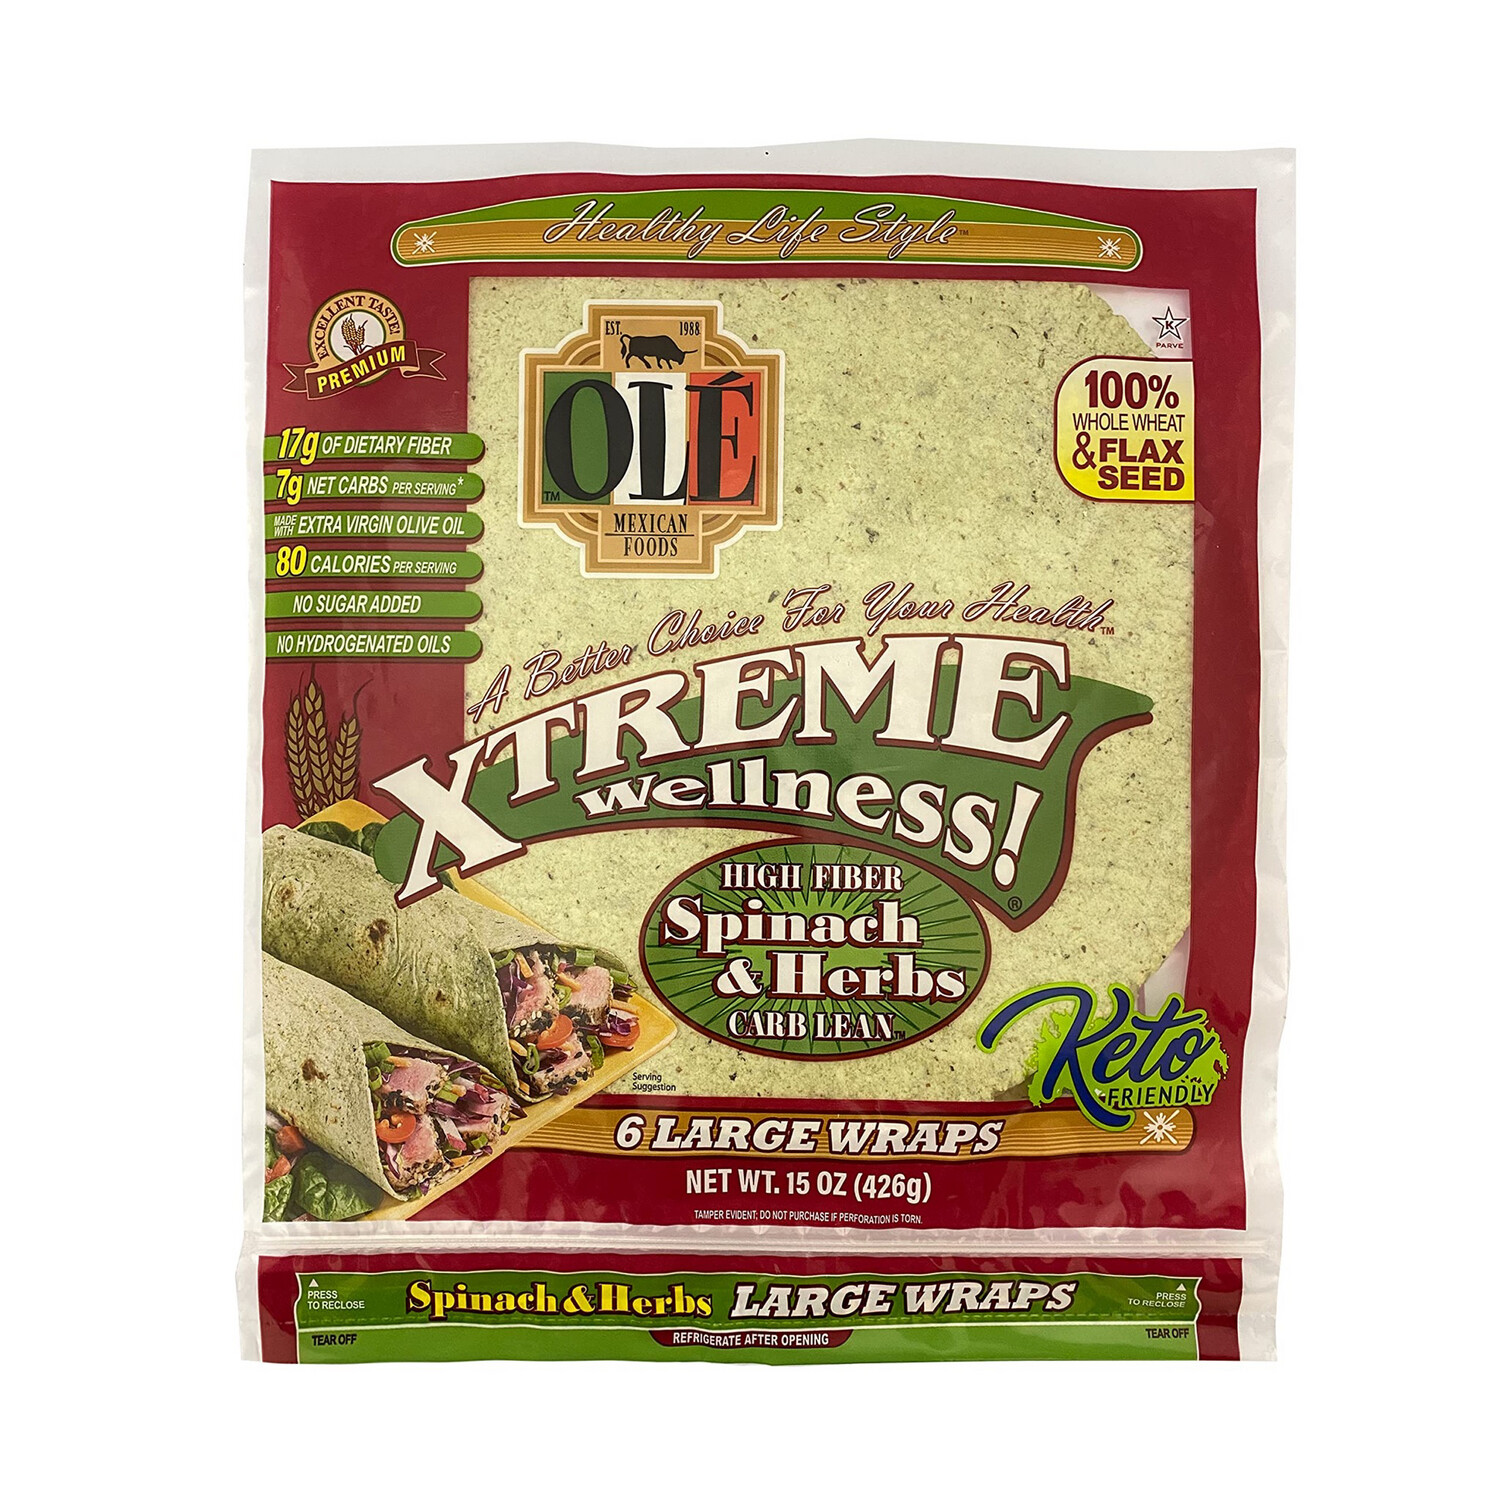 Ole Xtreme Wellness High Fiber Spinach & Herbs Tortillas LARGE